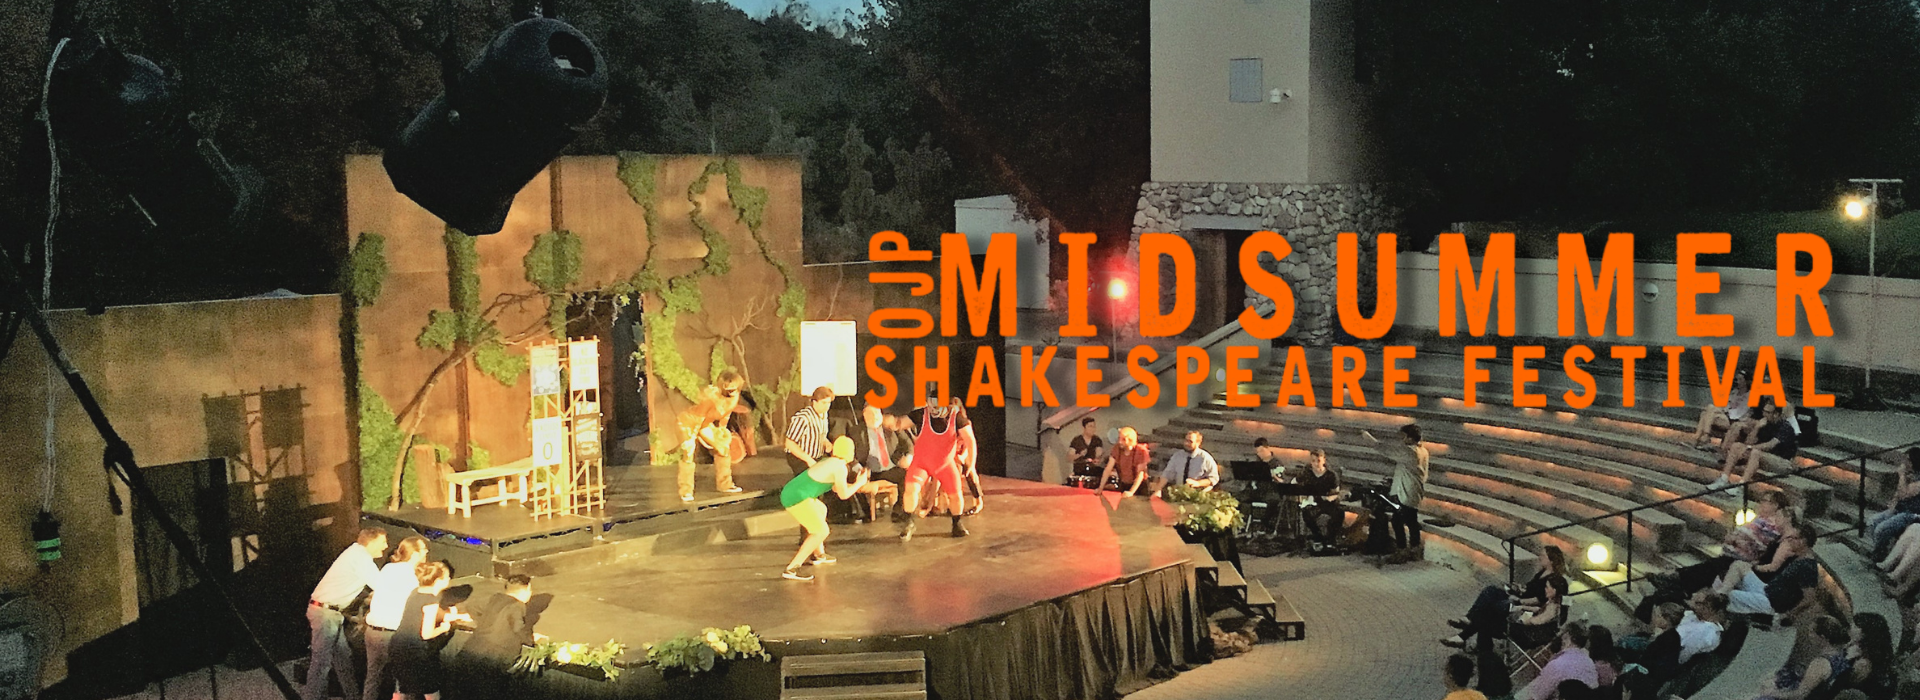 Midsummer Shakespeare Festival in Claremont, CA